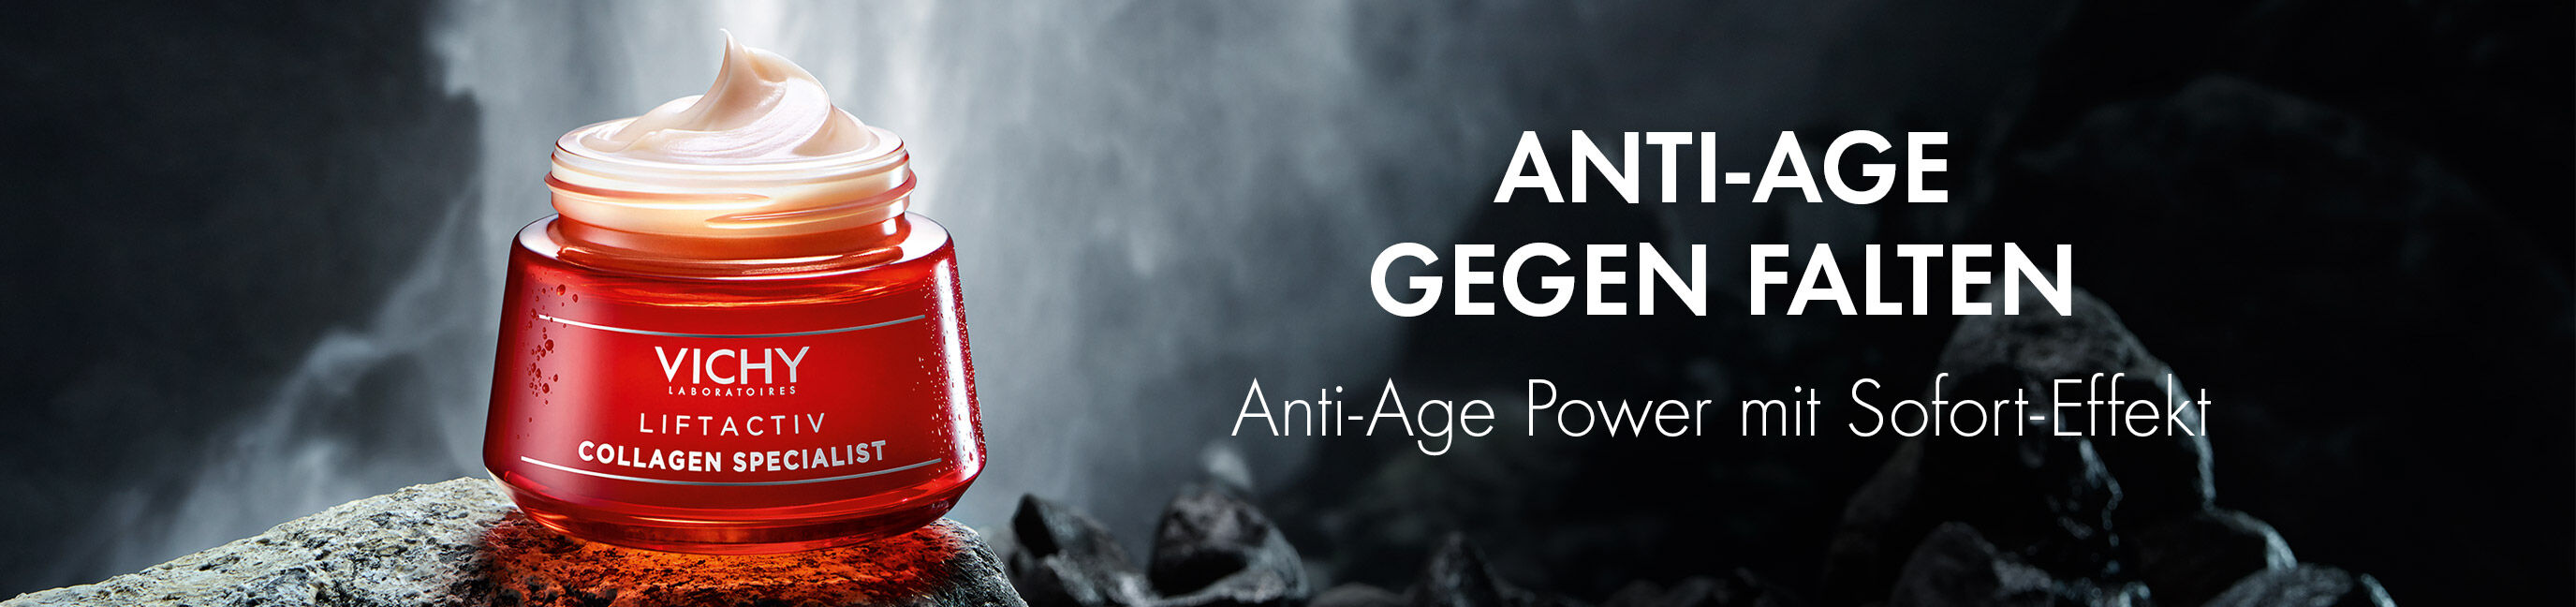 Anti-Age-Pflege-gegen-Falten